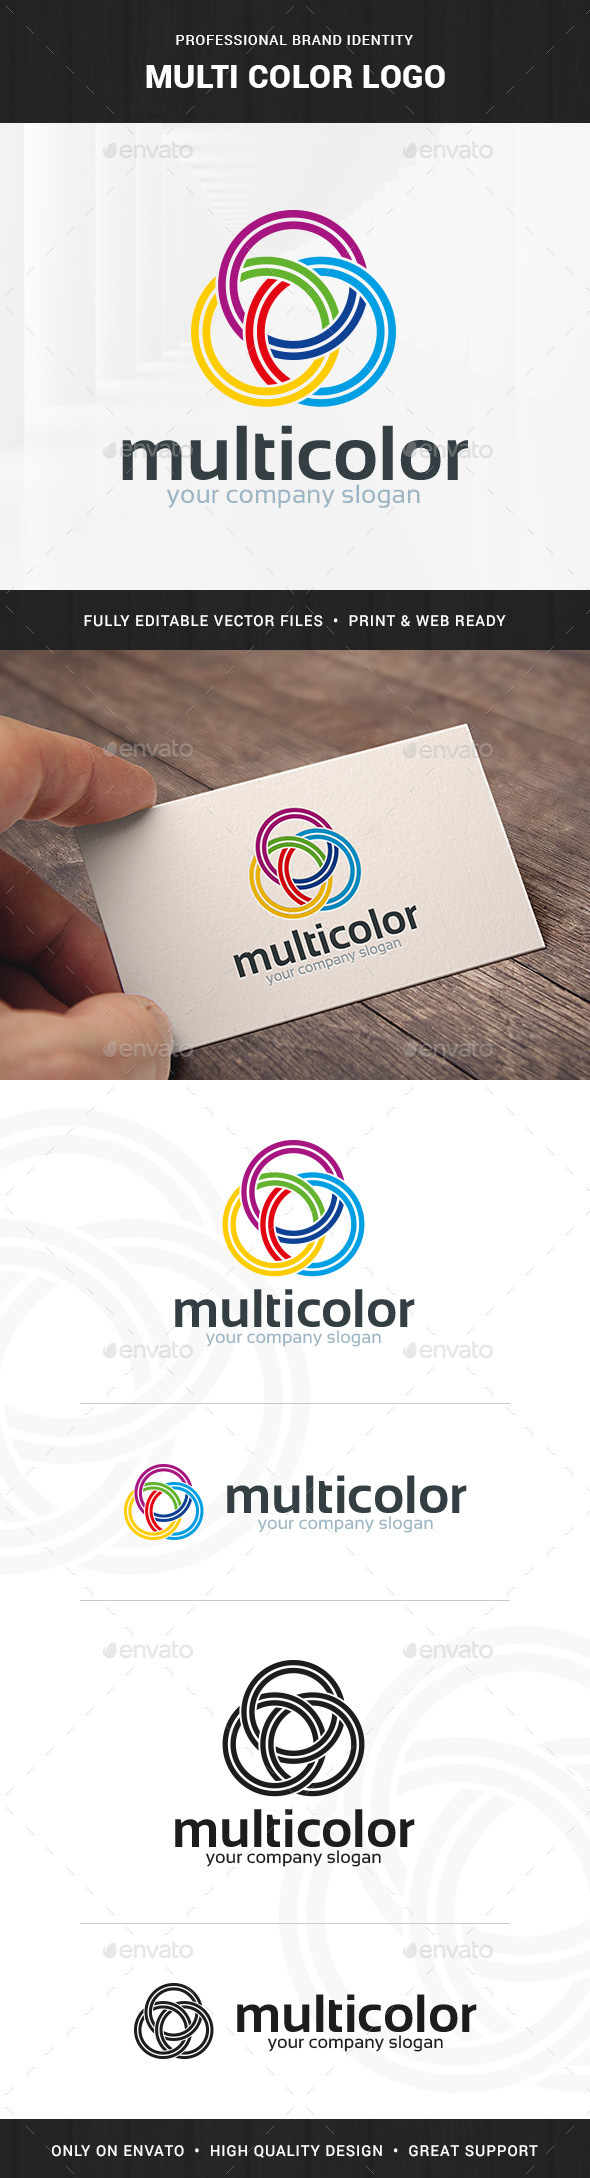 Multi Color Logo Template